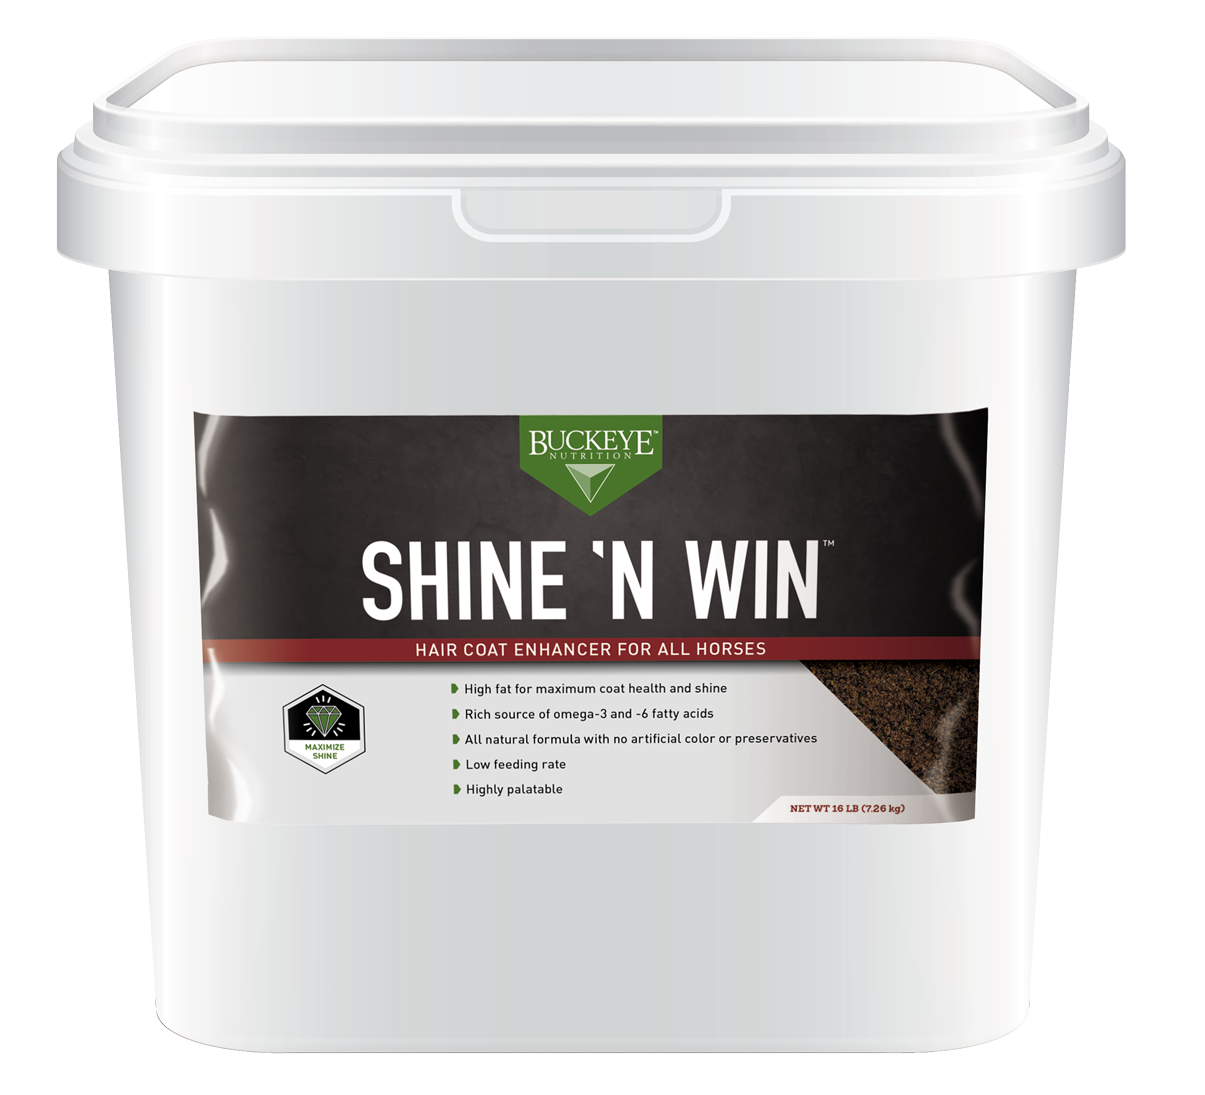 SHINE 'N WIN™ package image